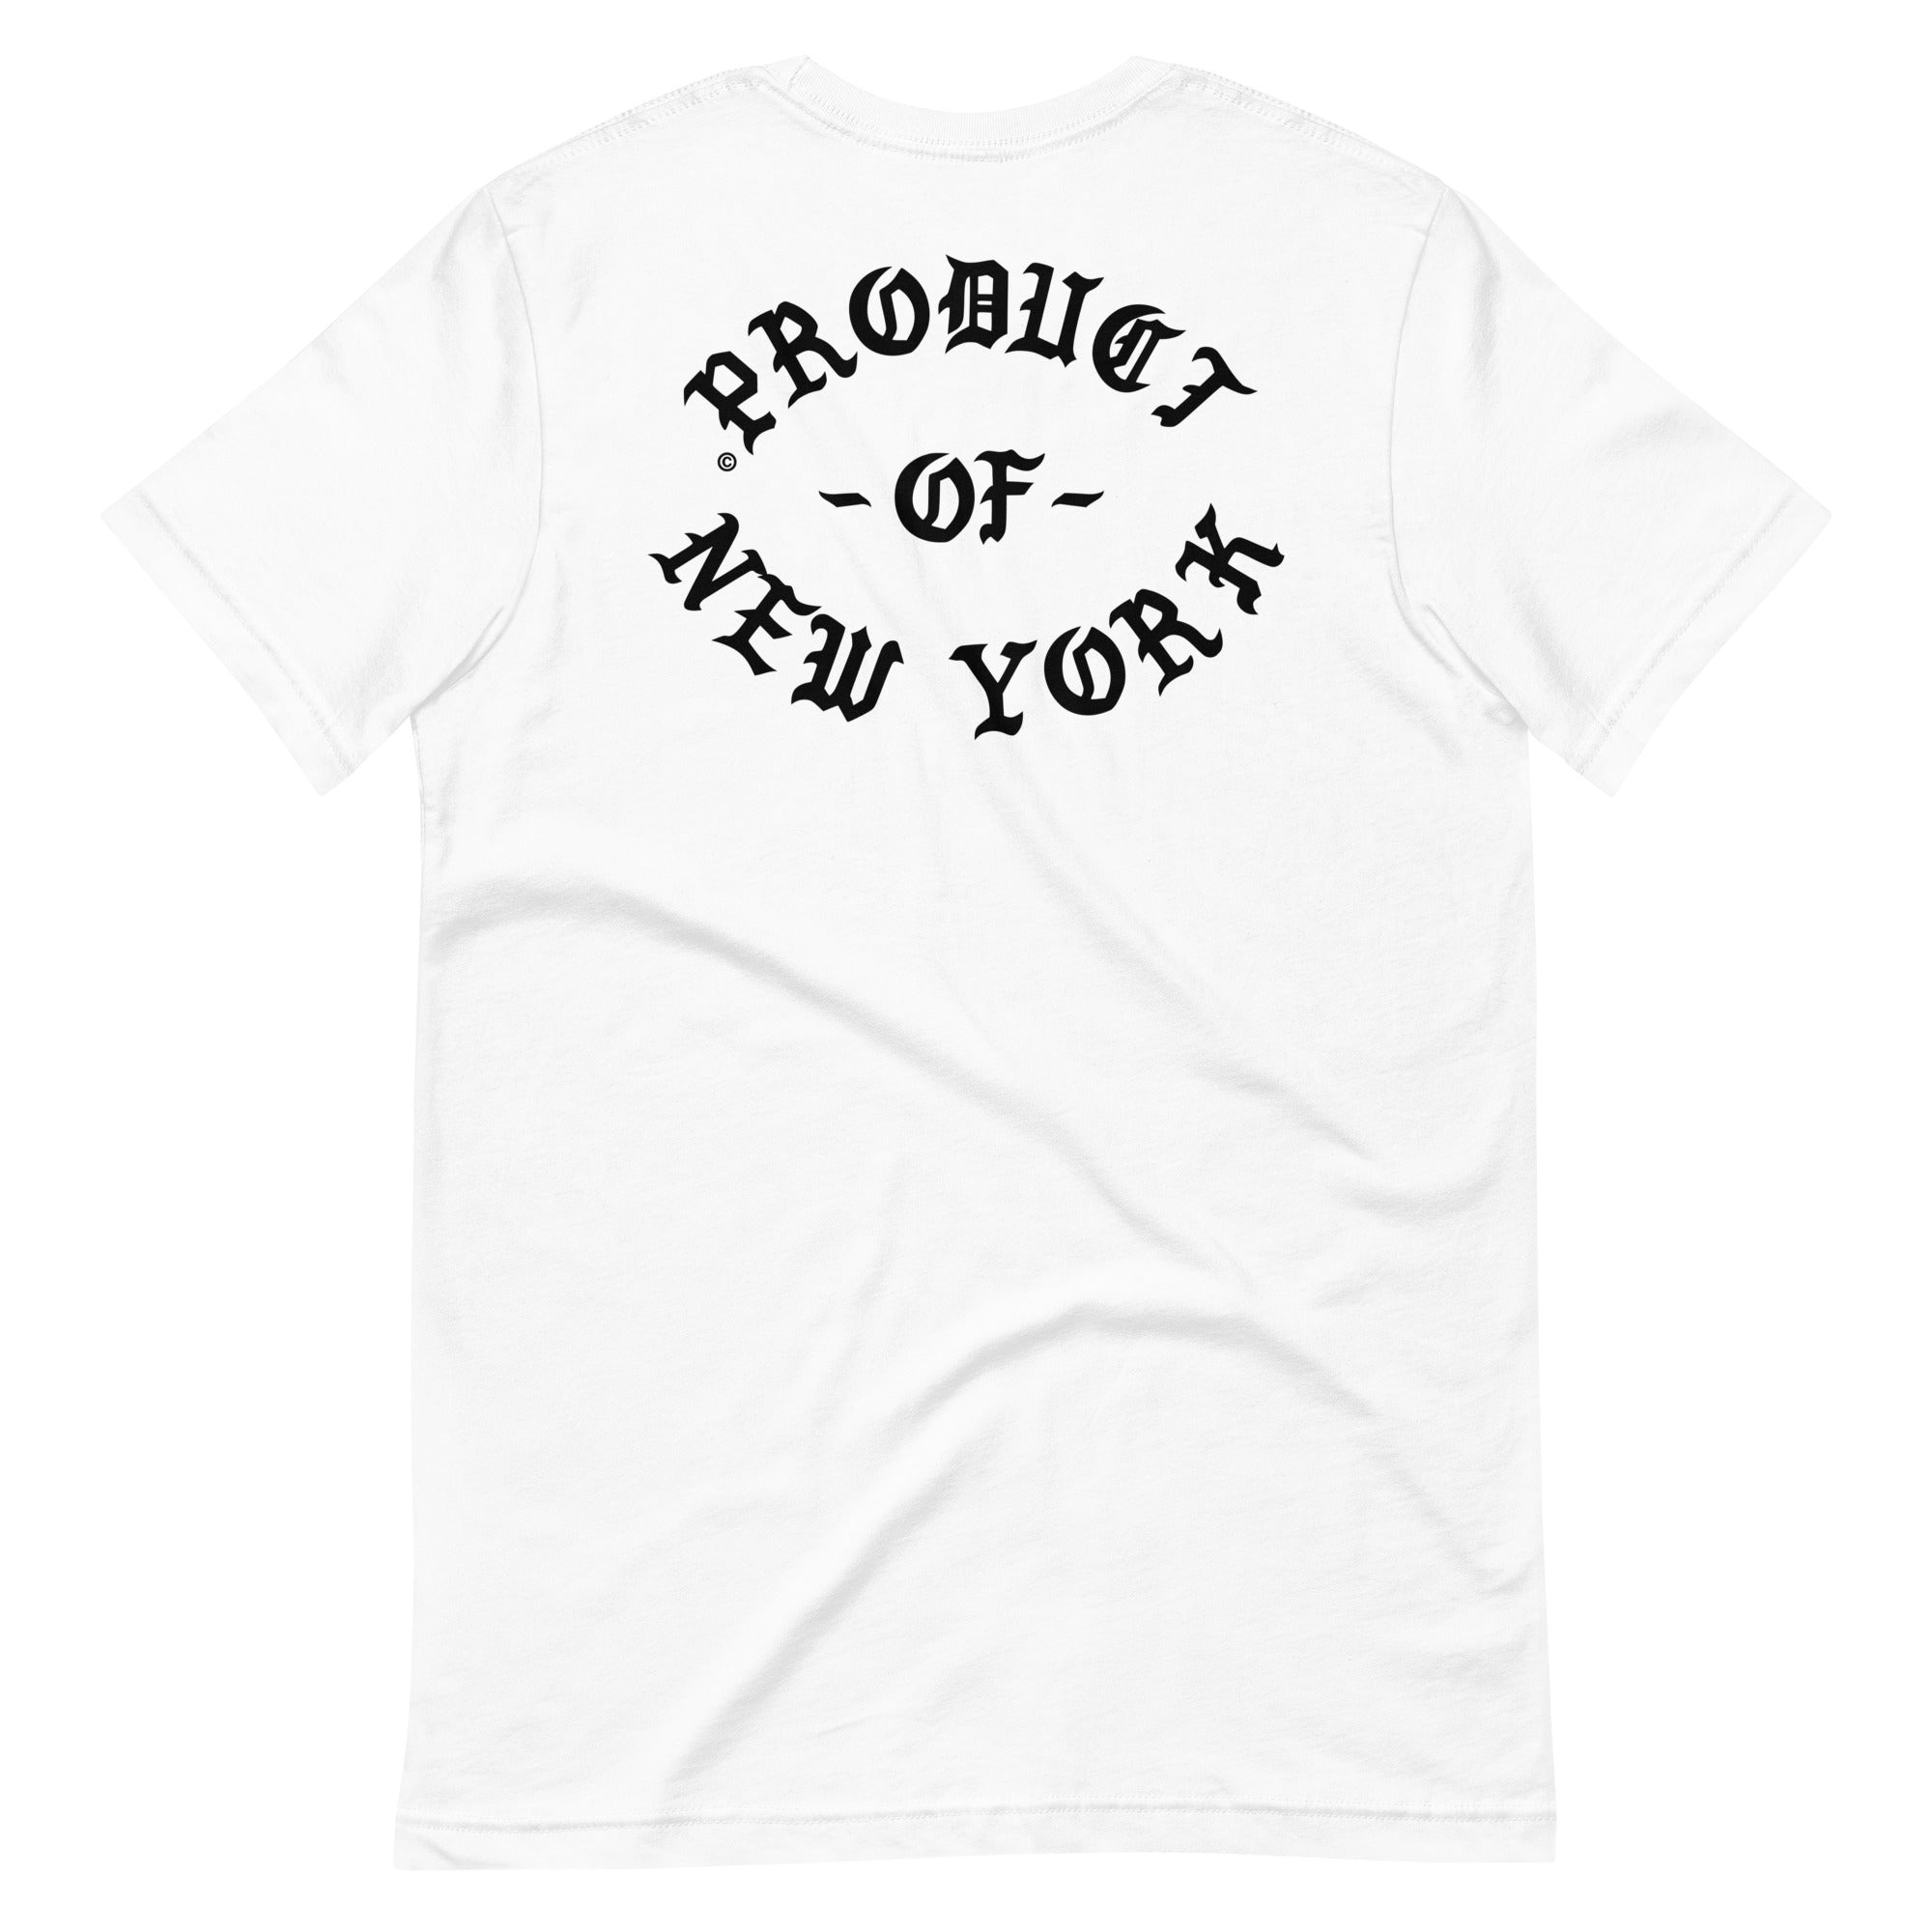 Product of New York - Unisex T-Shirt